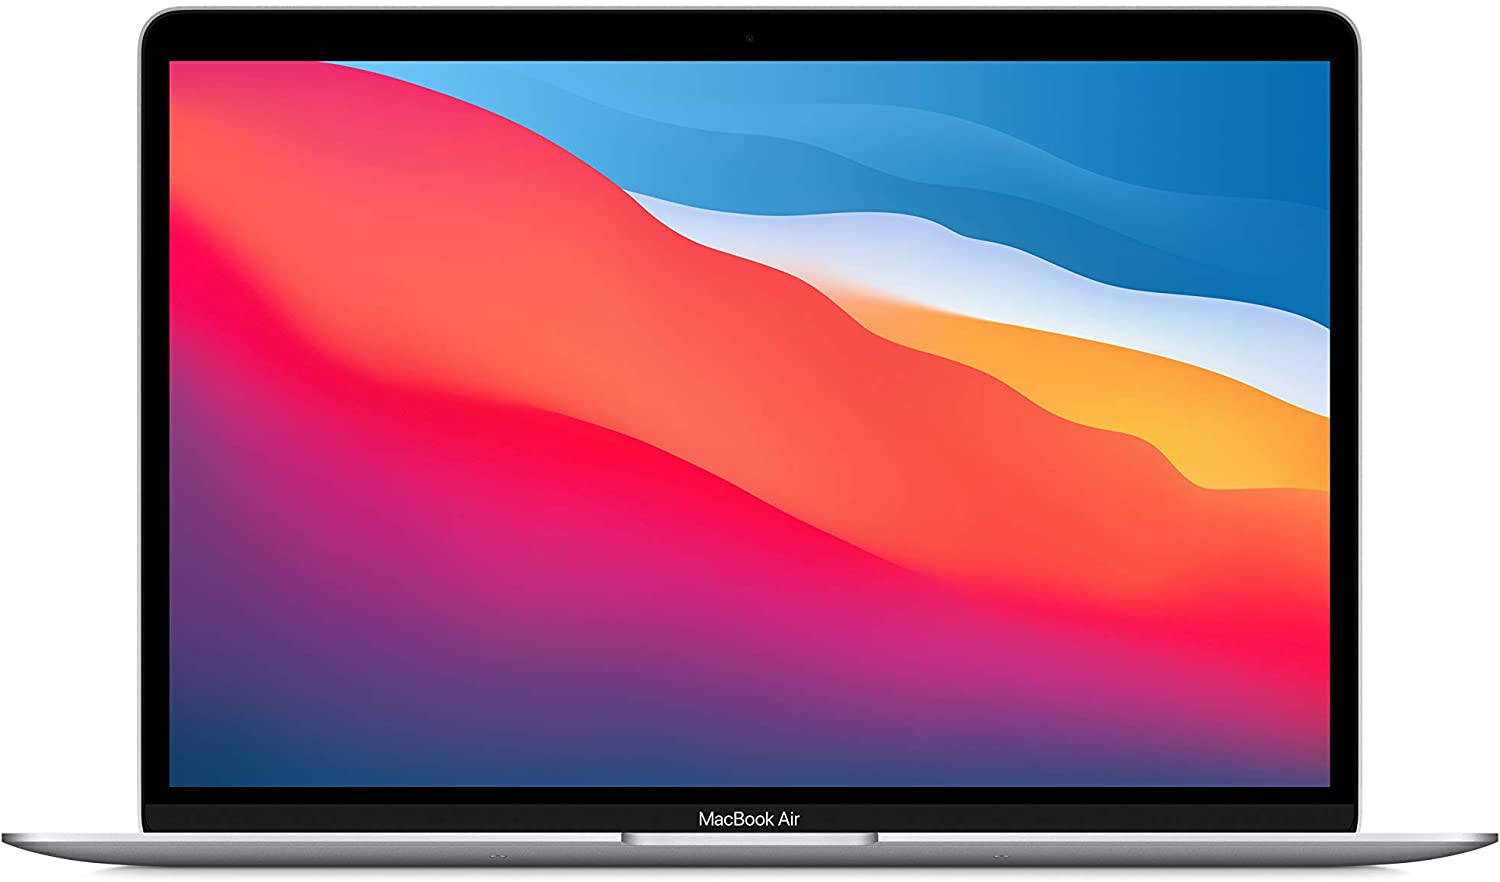 Apple MacBook Air 13.3" Laptop - Apple M1 Chip - 8GB Memory - 256GB SSD (Late 2020) - Silver